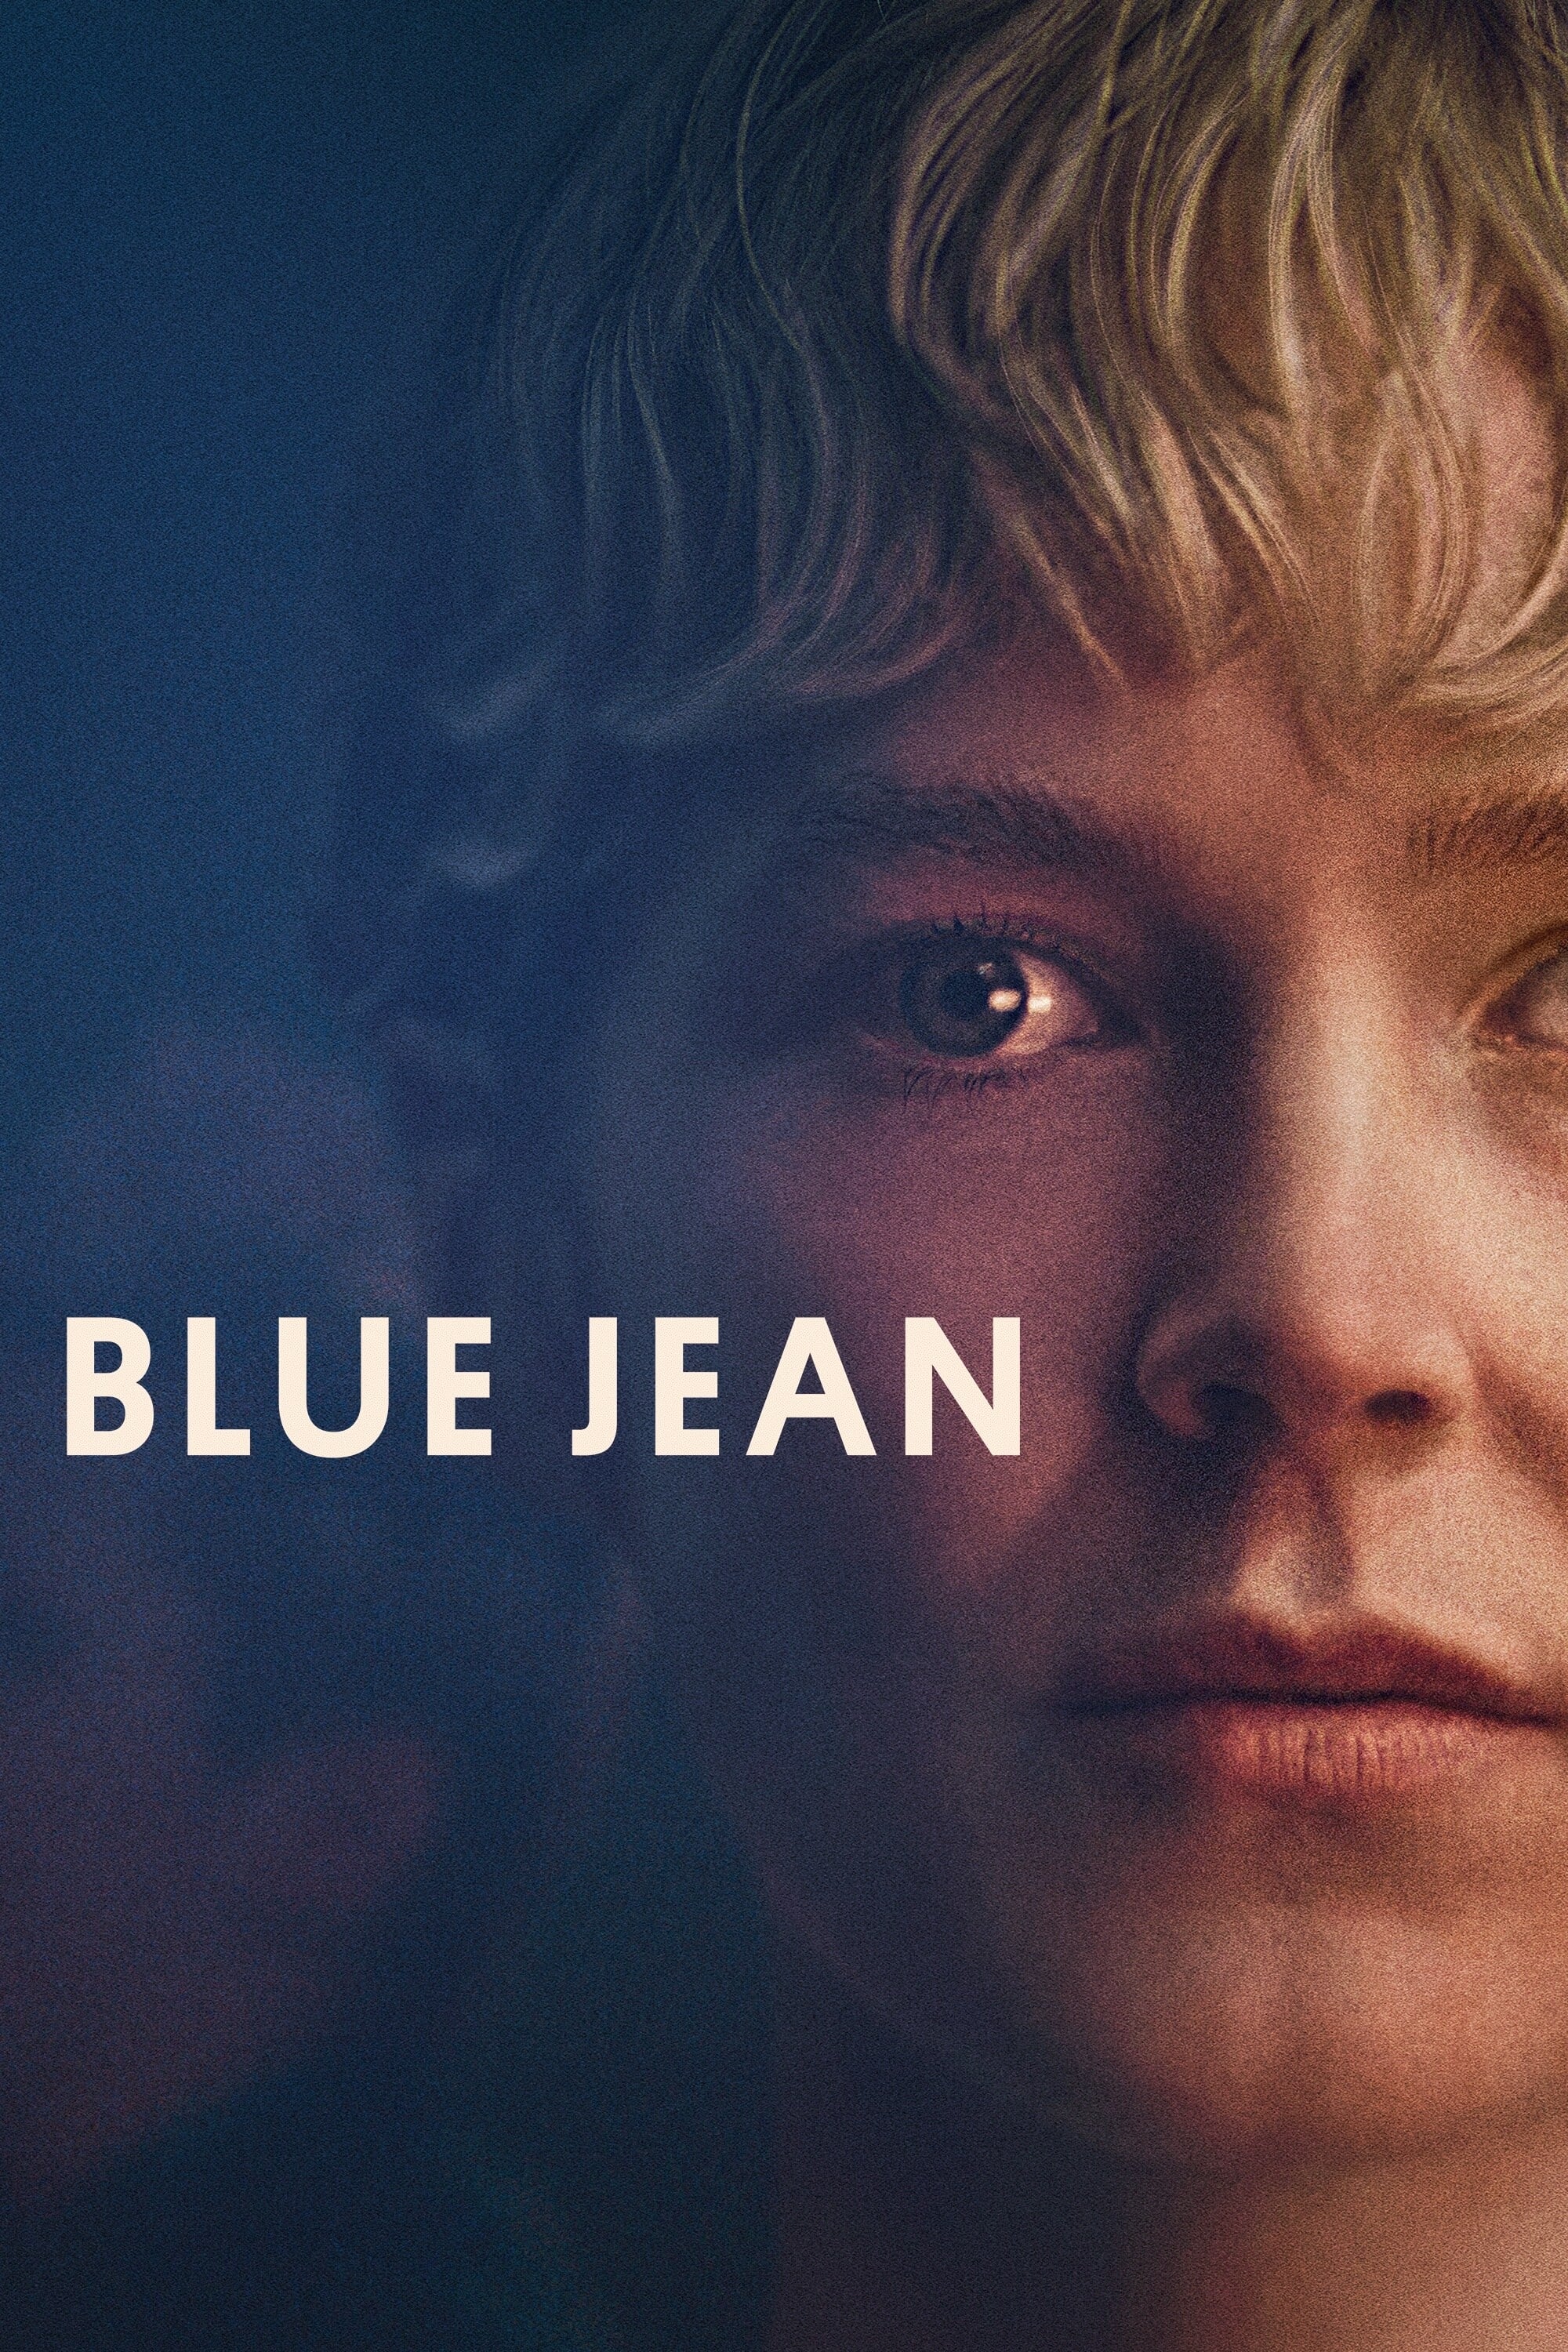 Blue Jean poster